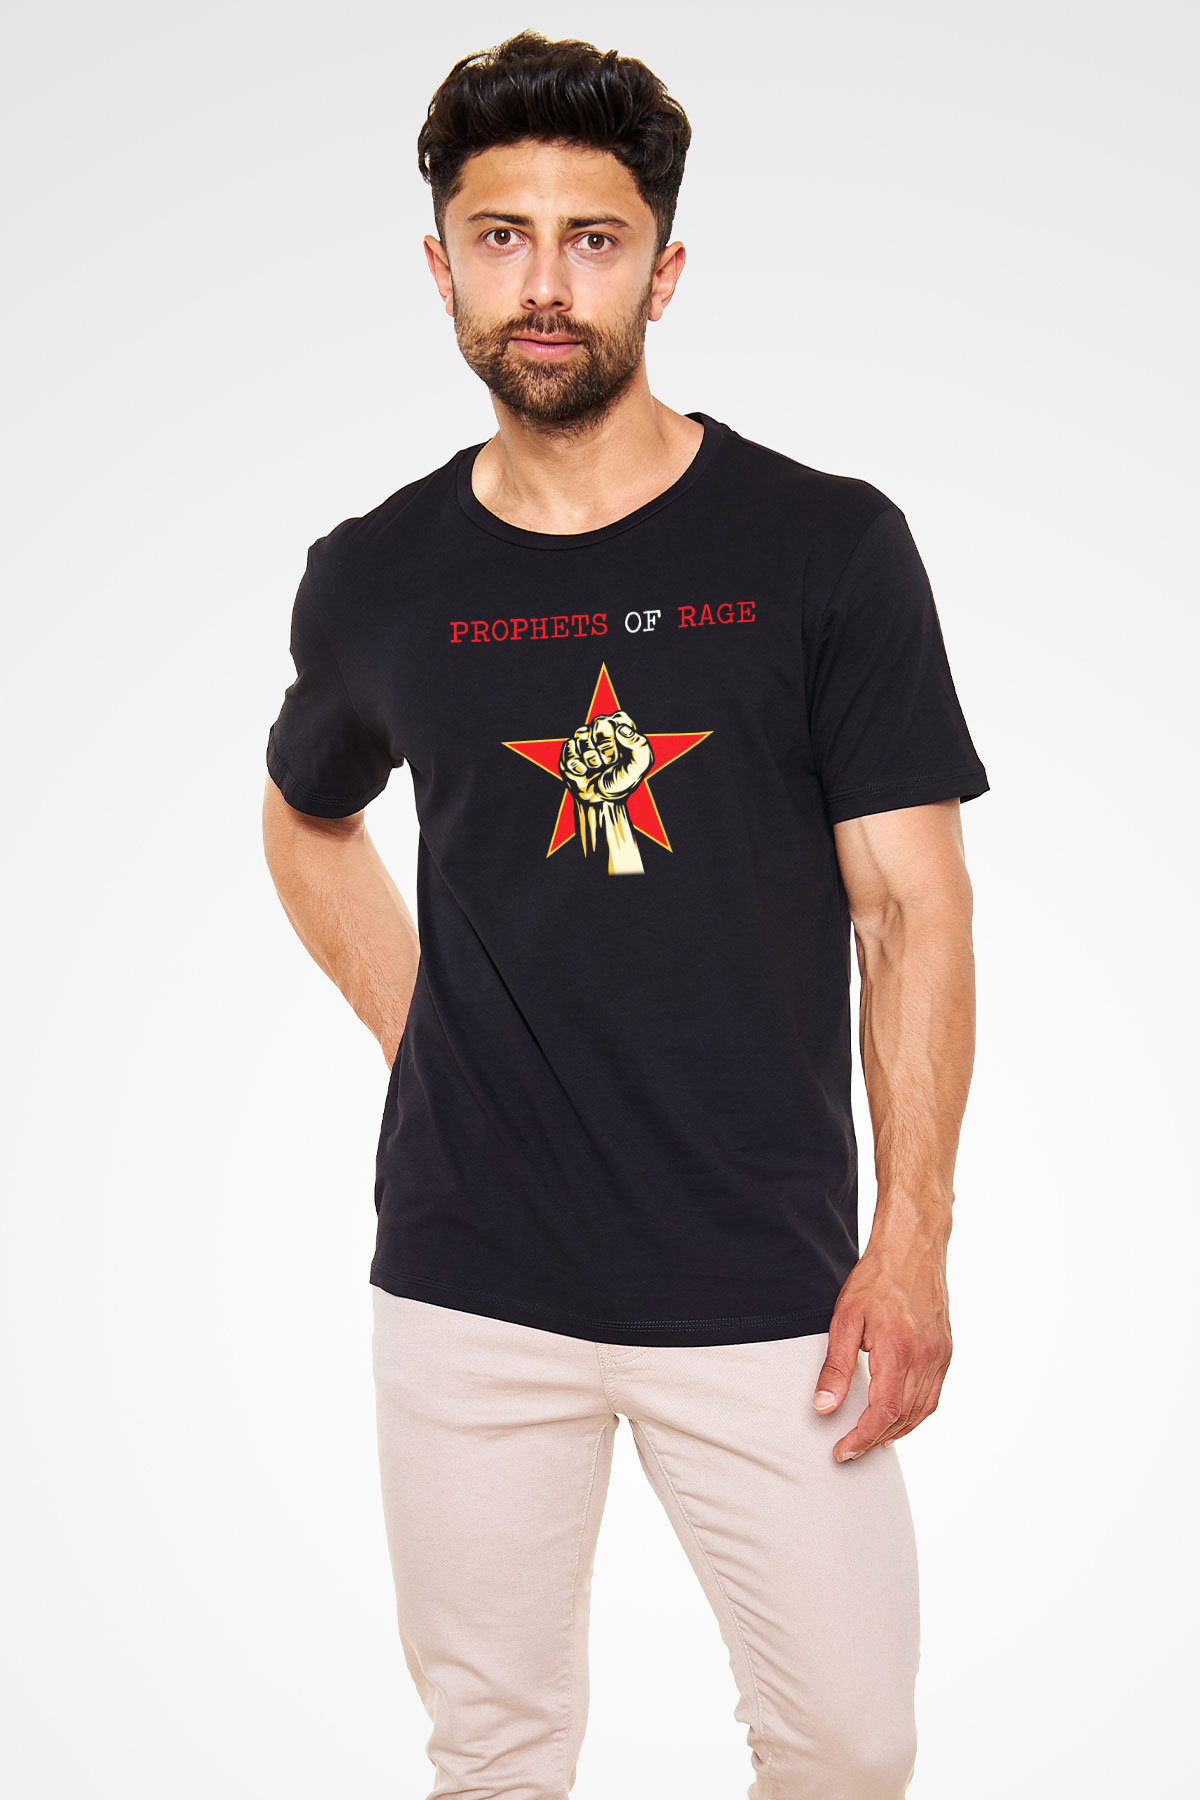 Prophets of Rage Black Unisex T-Shirt - Tees - Shirts